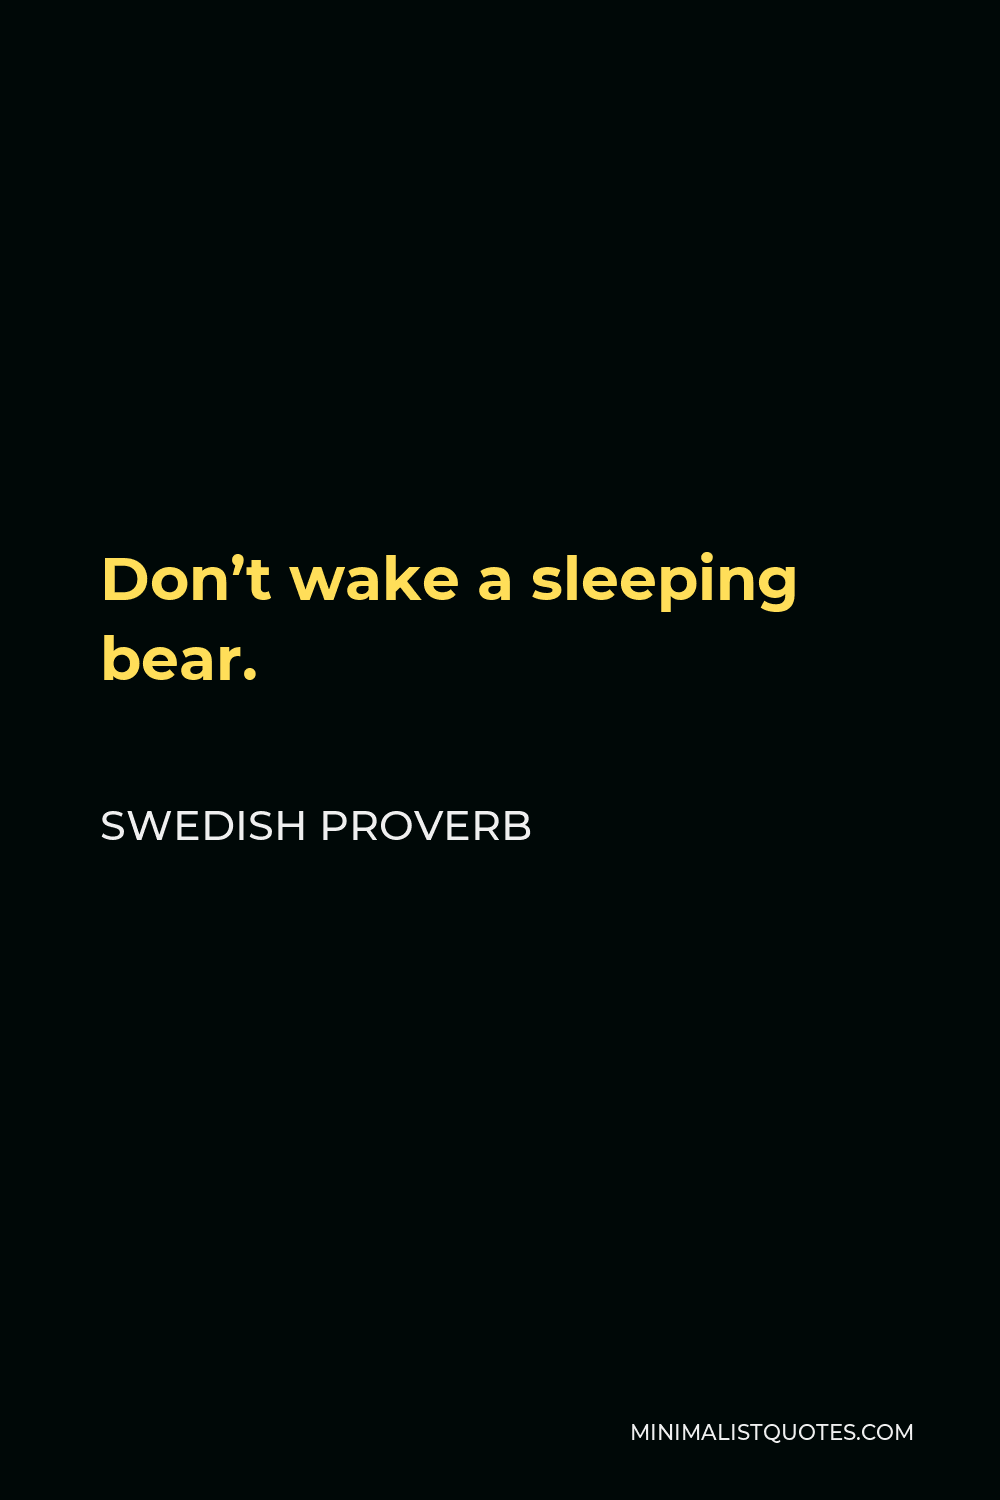 Swedish Proverb Quote - Don’t wake a sleeping bear.